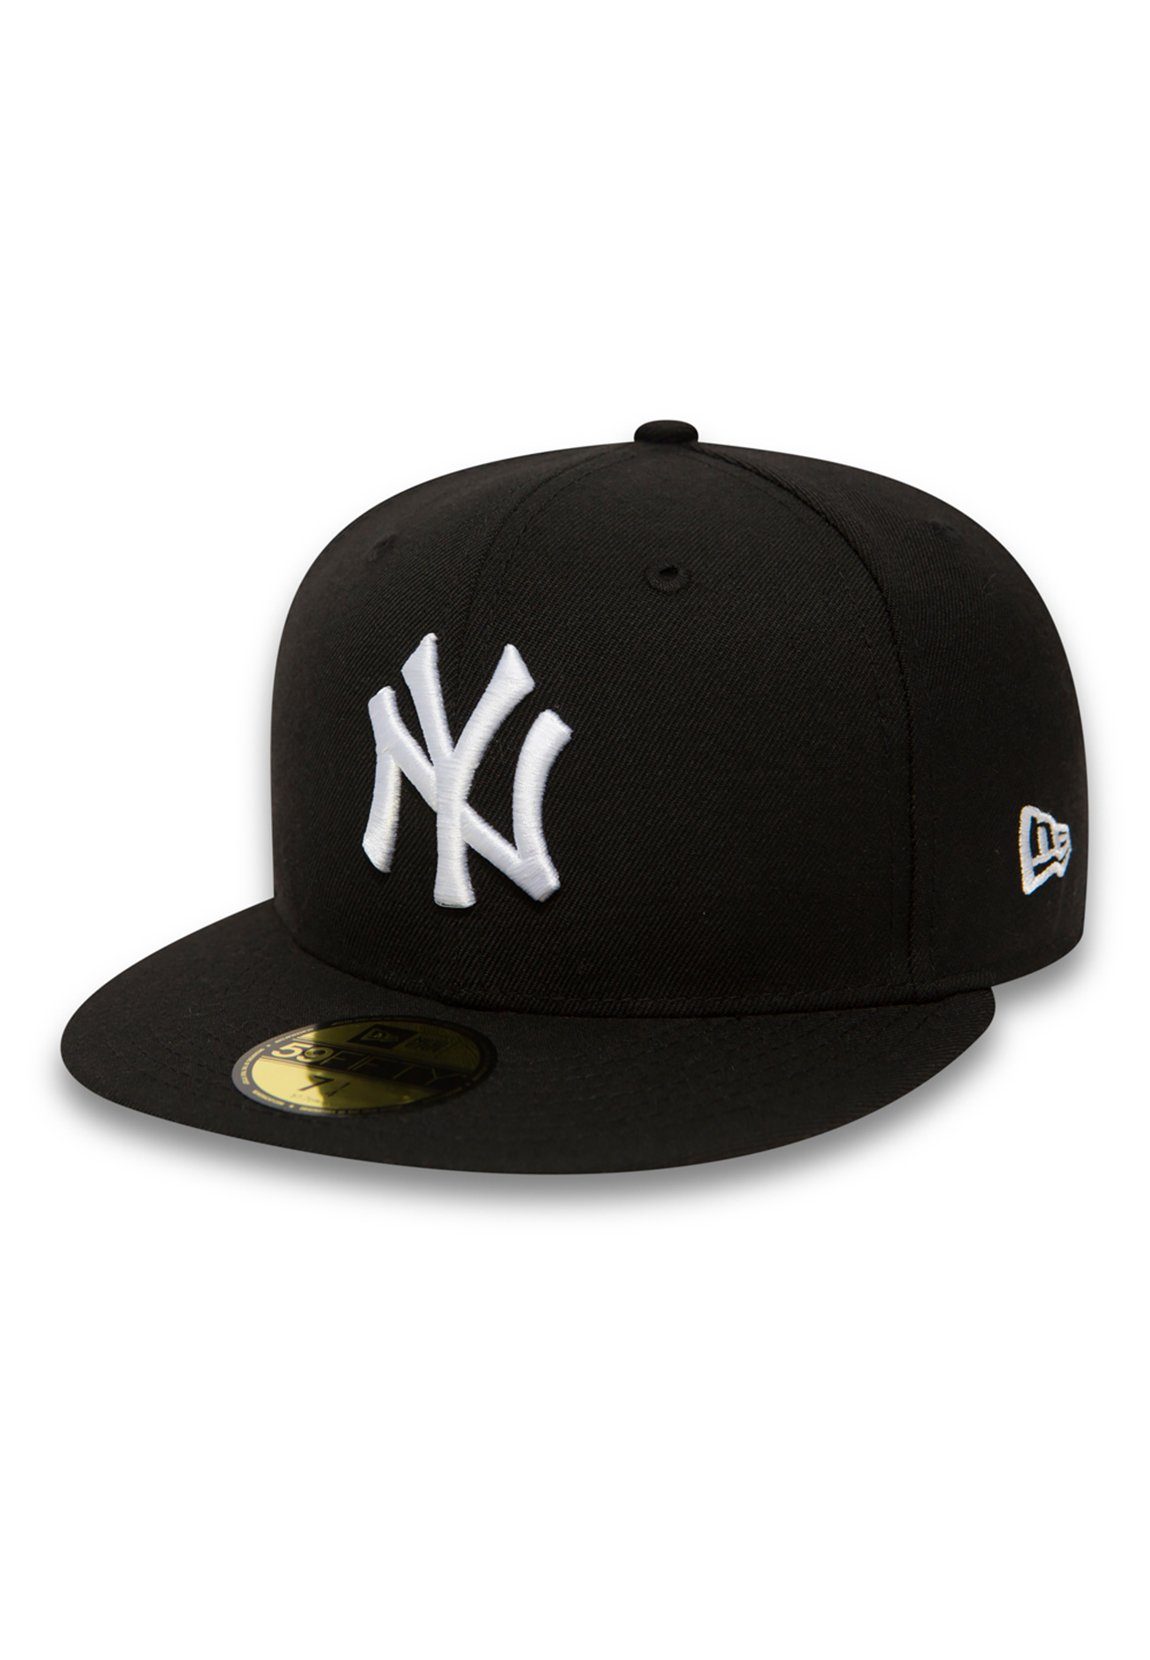 New Era Baseball Cap New Era 59Fiftys Cap - NY YANKEES - Black-White Schwarz/Weiß